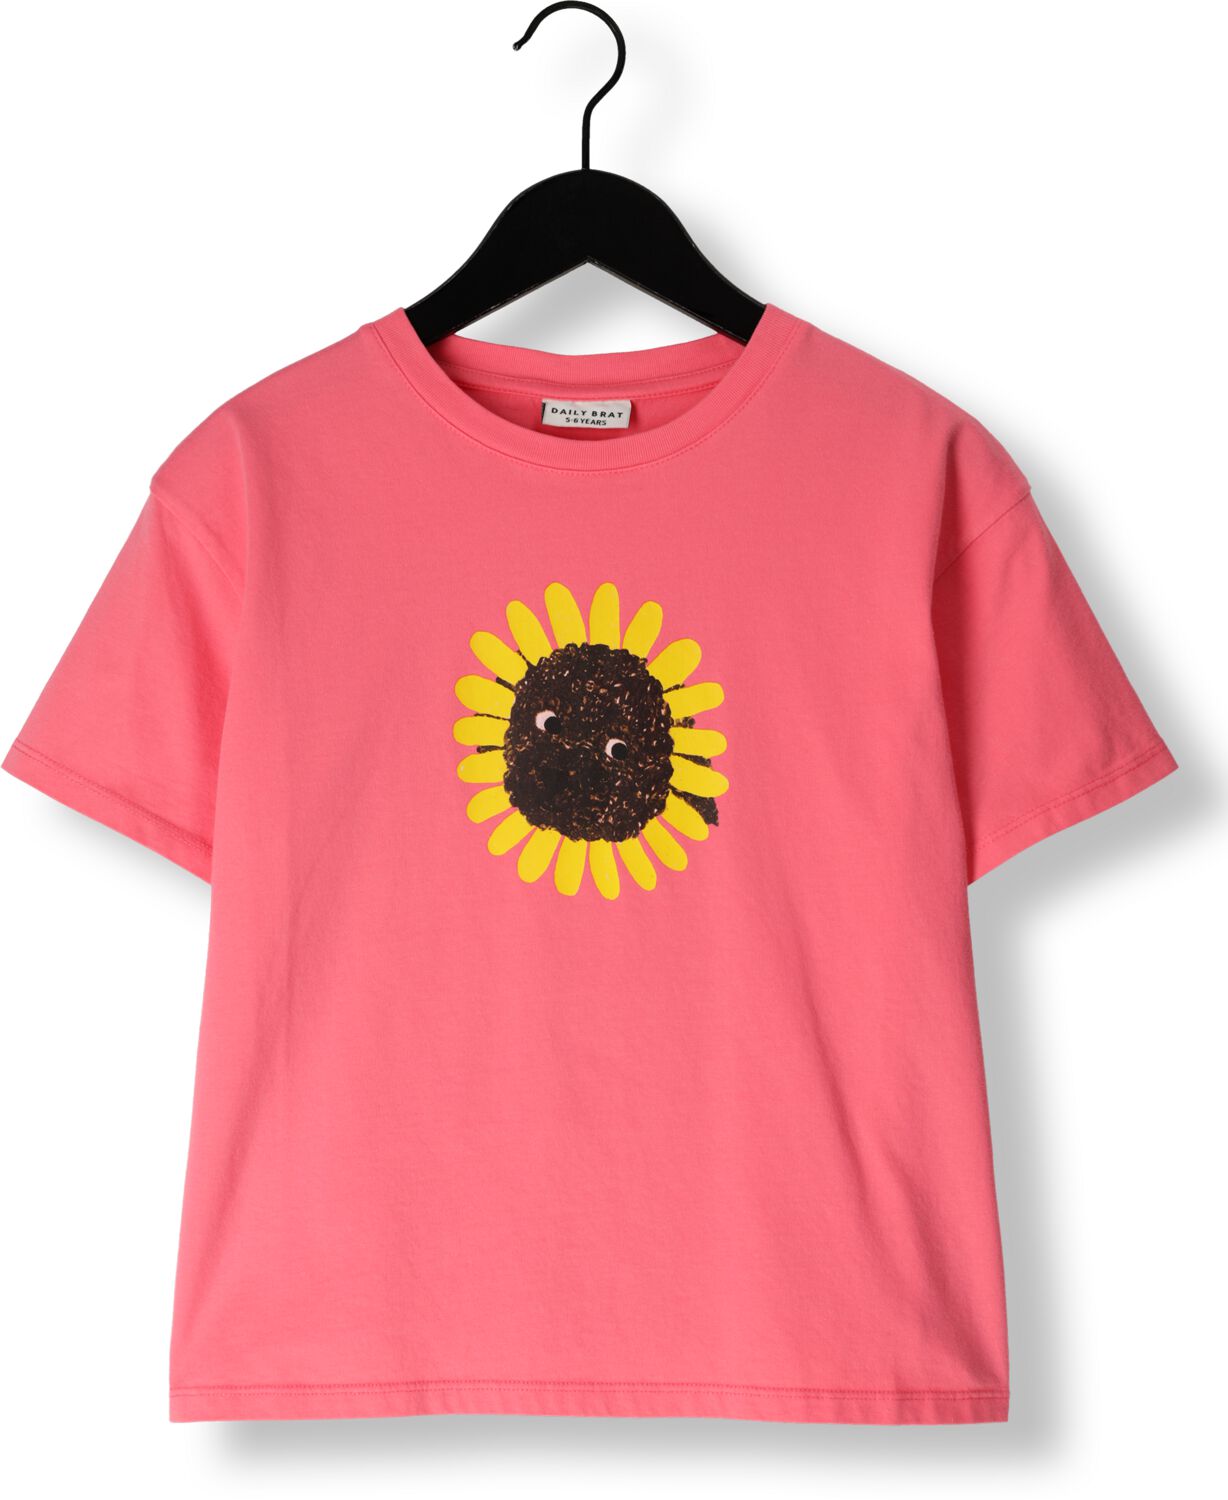 DAILY BRAT Meisjes Tops & T-shirts Sunny Dog T-shirt Roze